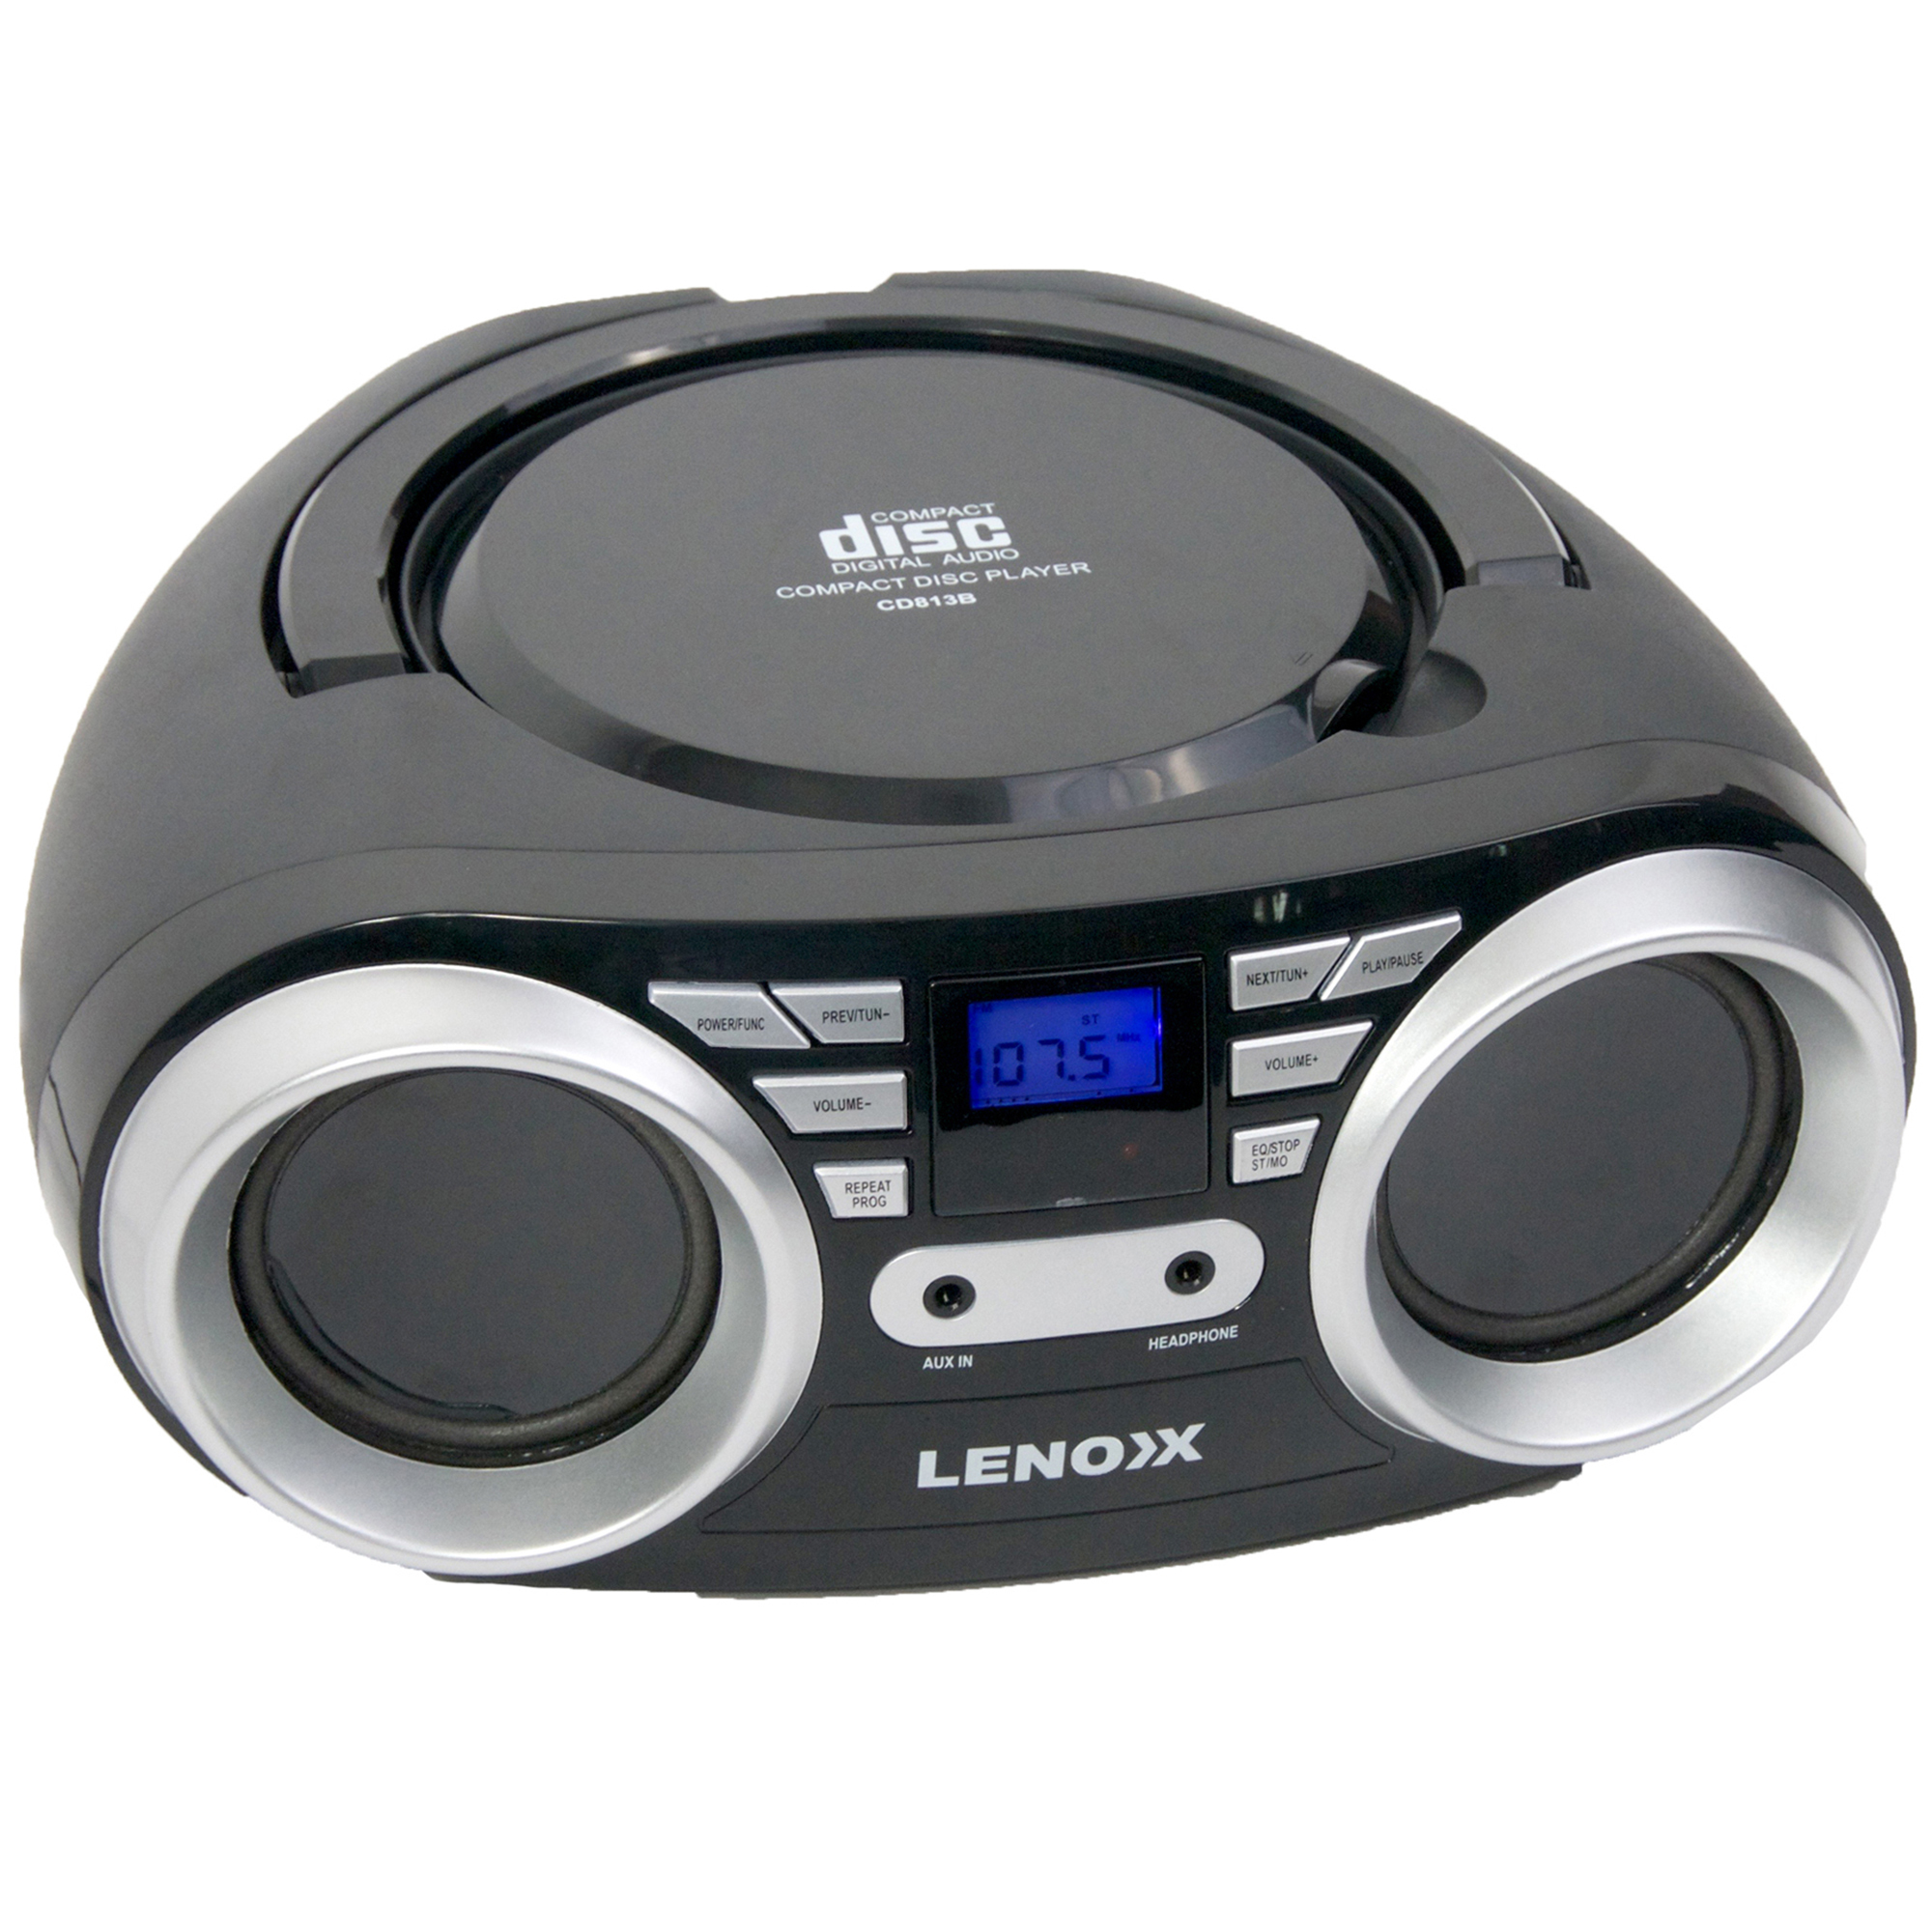 Cd mp3 player. Lenoxx cd155. Lenoxx Portable CD Player. CD mp3 плеер Lenoxx. CD-плеер Бумбокс,Bluetooth CD-плеер динамики стереофонический.